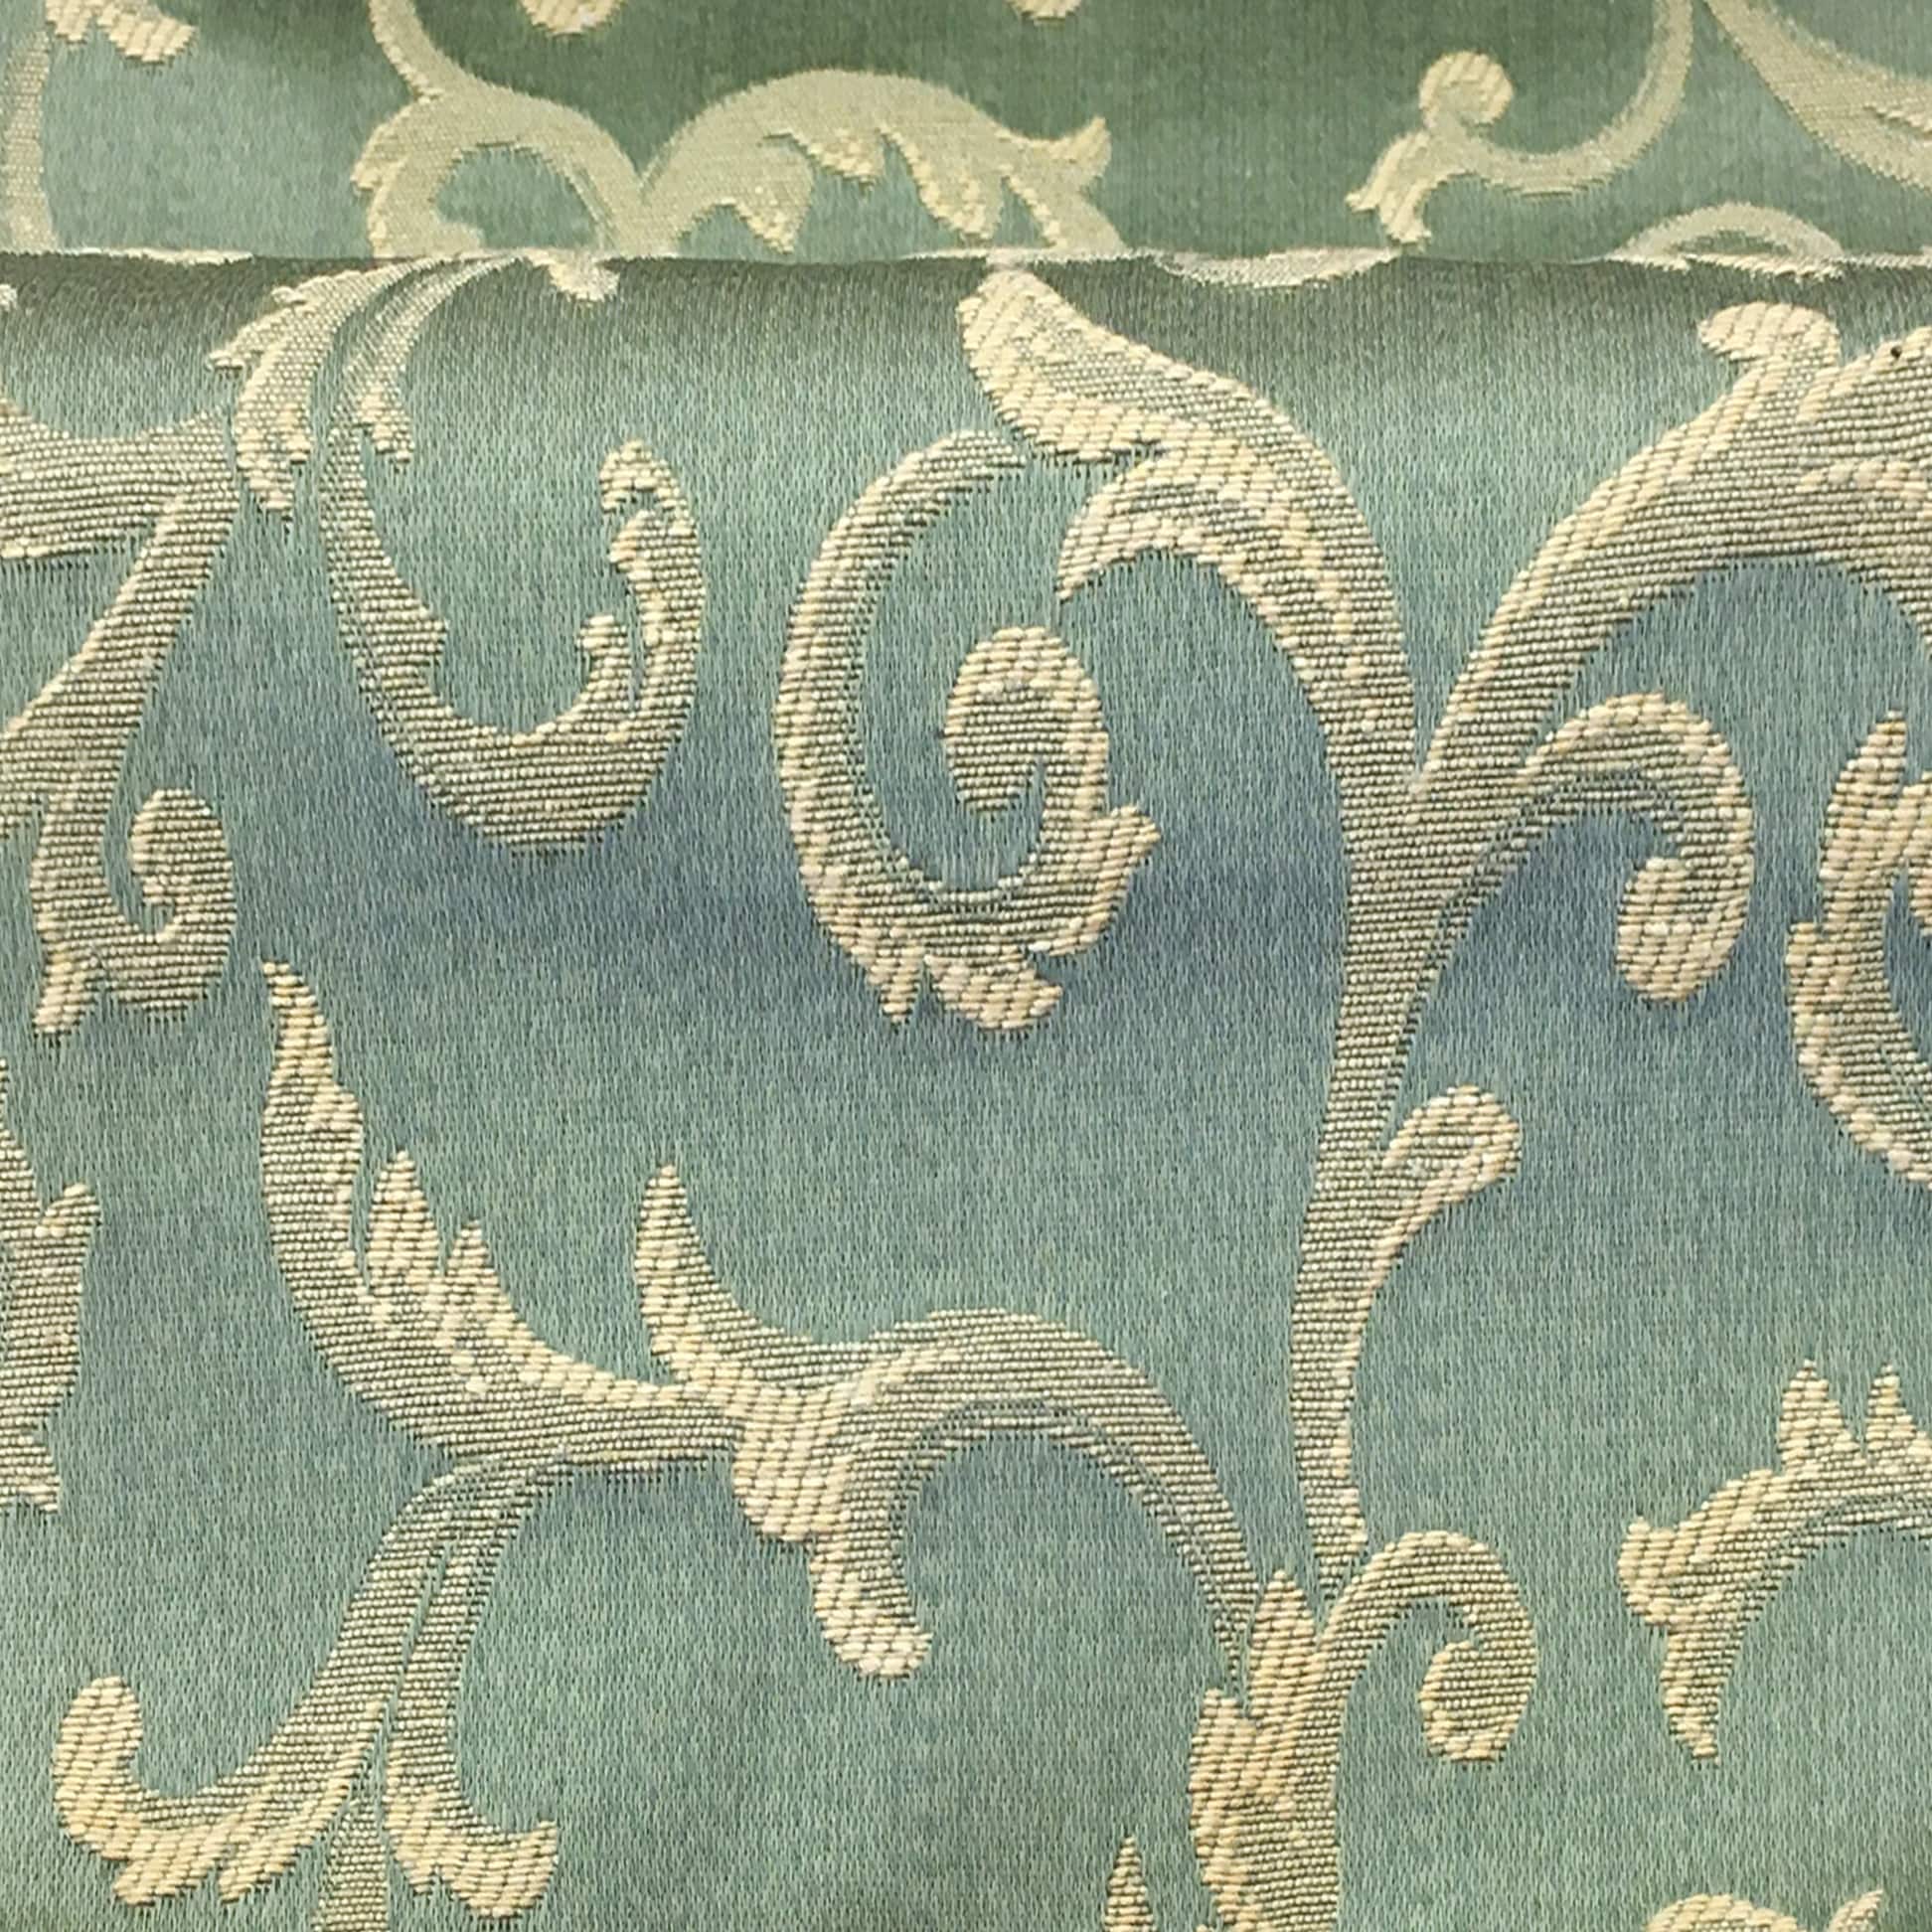 Scroll Swirl Jacquard Fabric, Gold / Grey, Heavy Upholstery, 54 Wide